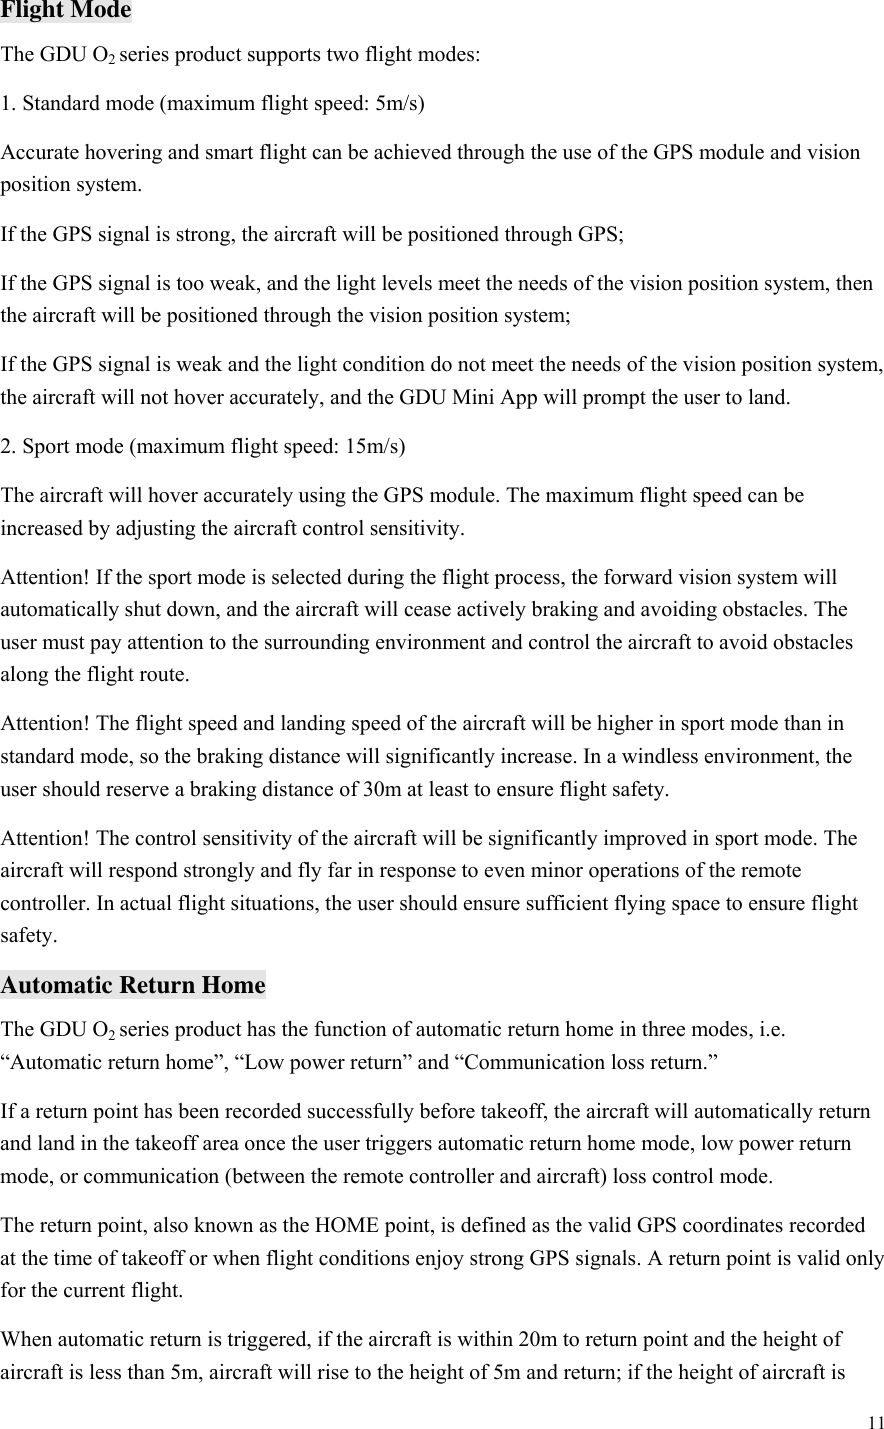 Page 11 of GDU Tech PD-O2-WF Aircraft User Manual 5   ok